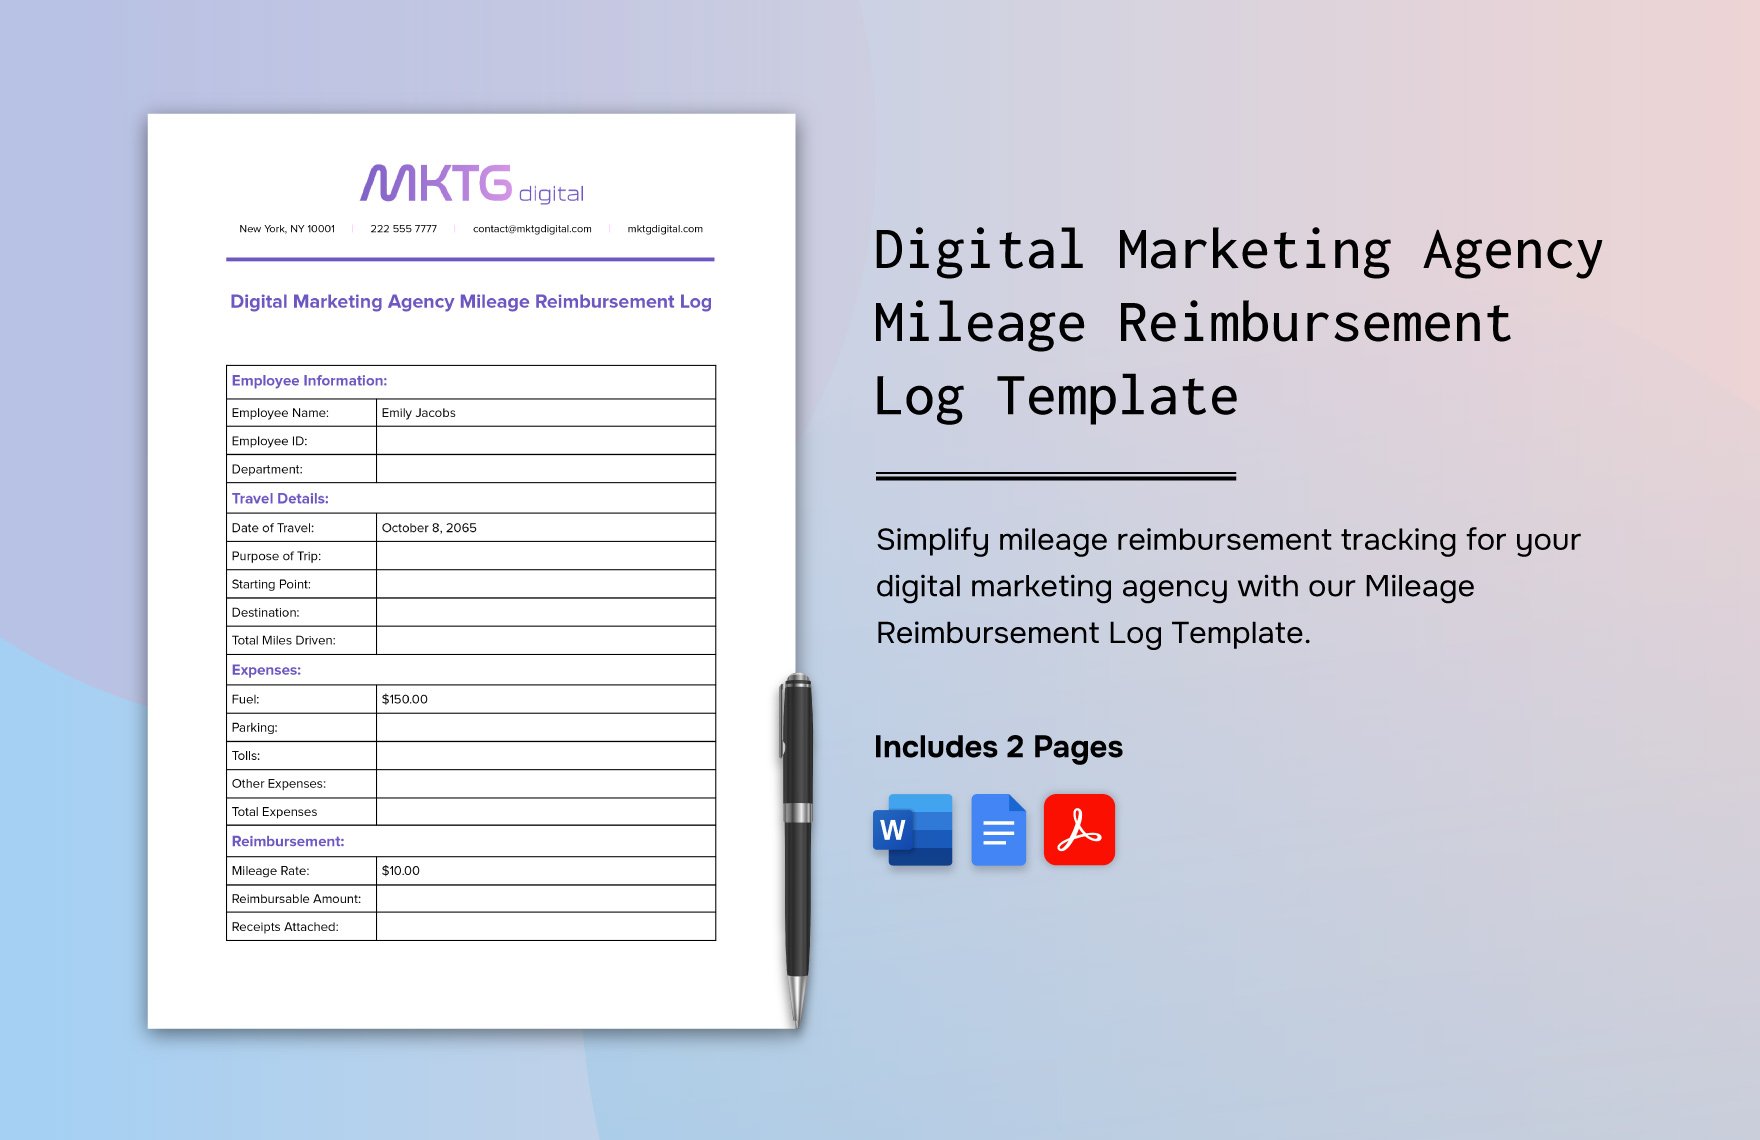 Digital Marketing Agency Mileage Reimbursement Log Template